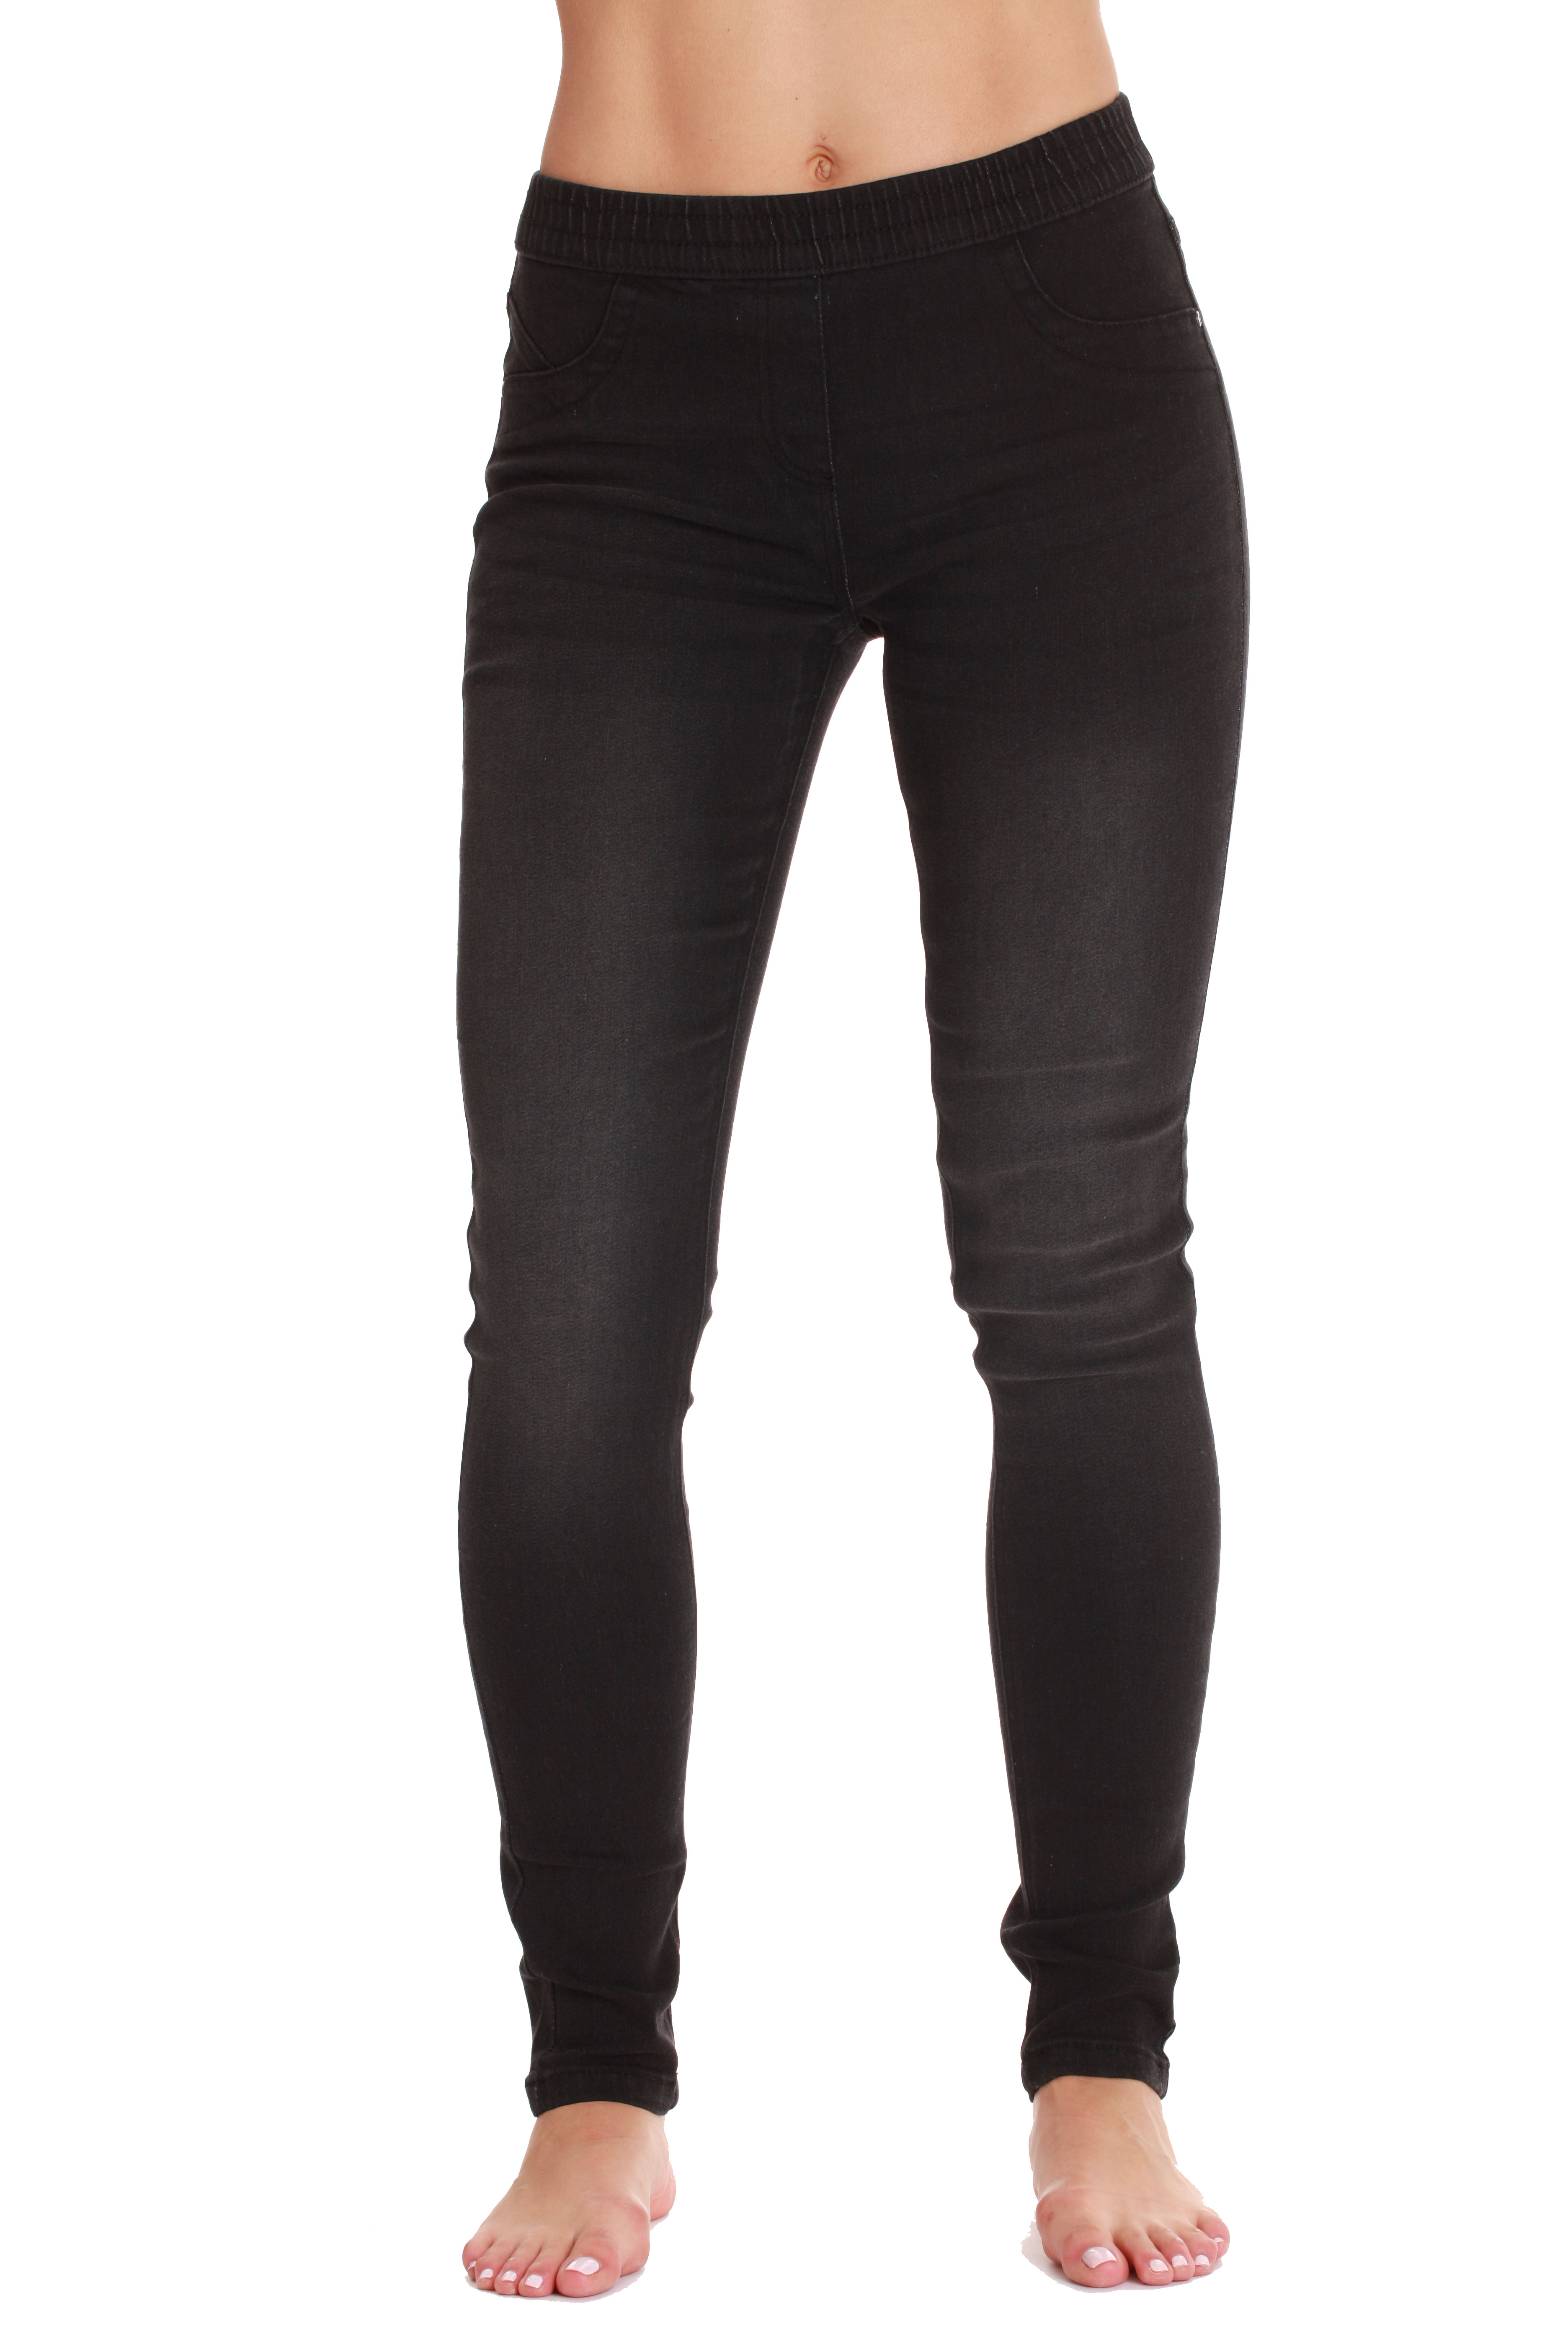 Just Love Women's Denim Jeggings with Pockets - Comfortable Stretch Jeans Leggings (Black Denim, Medium) - image 1 of 2